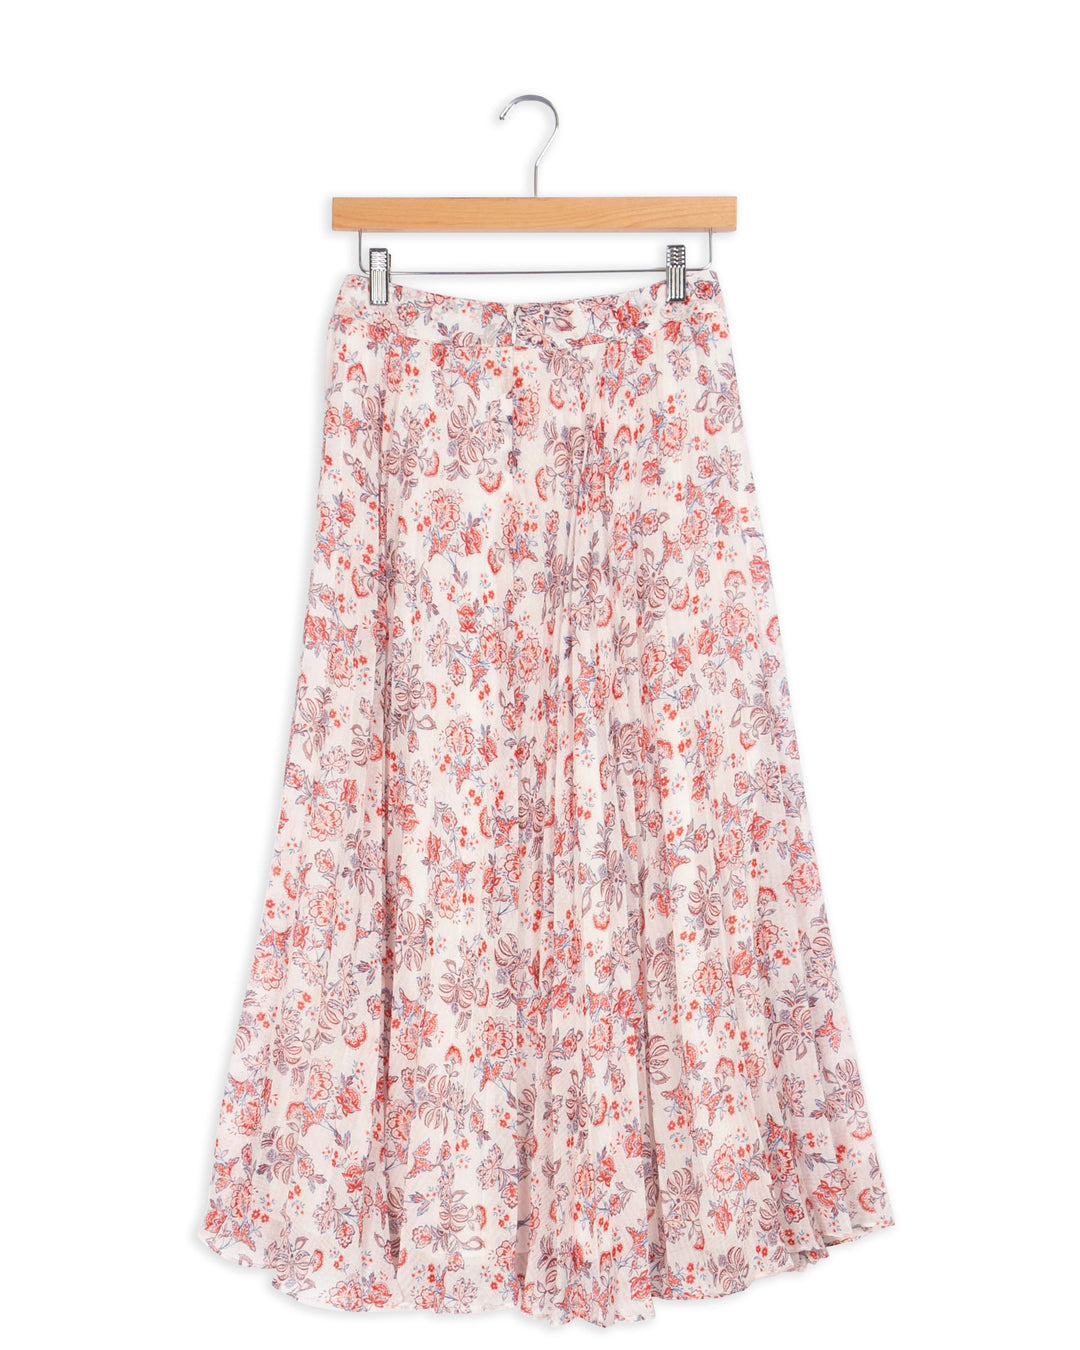 Floral skirt - 36 - Ekyog